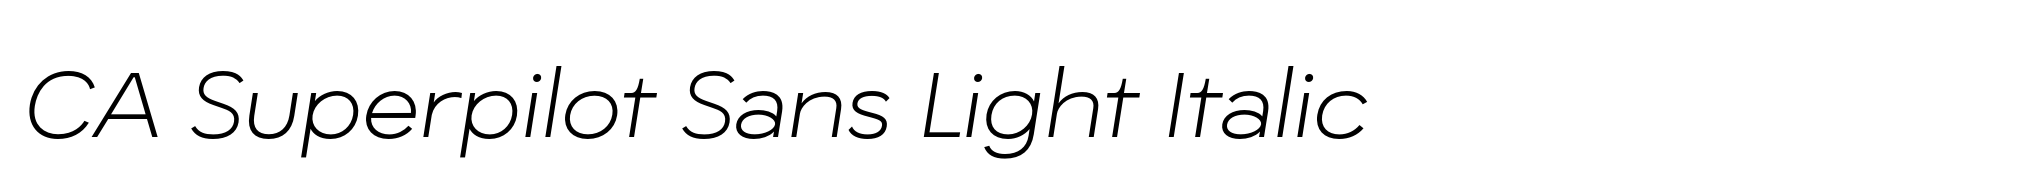 CA Superpilot Sans Light Italic image